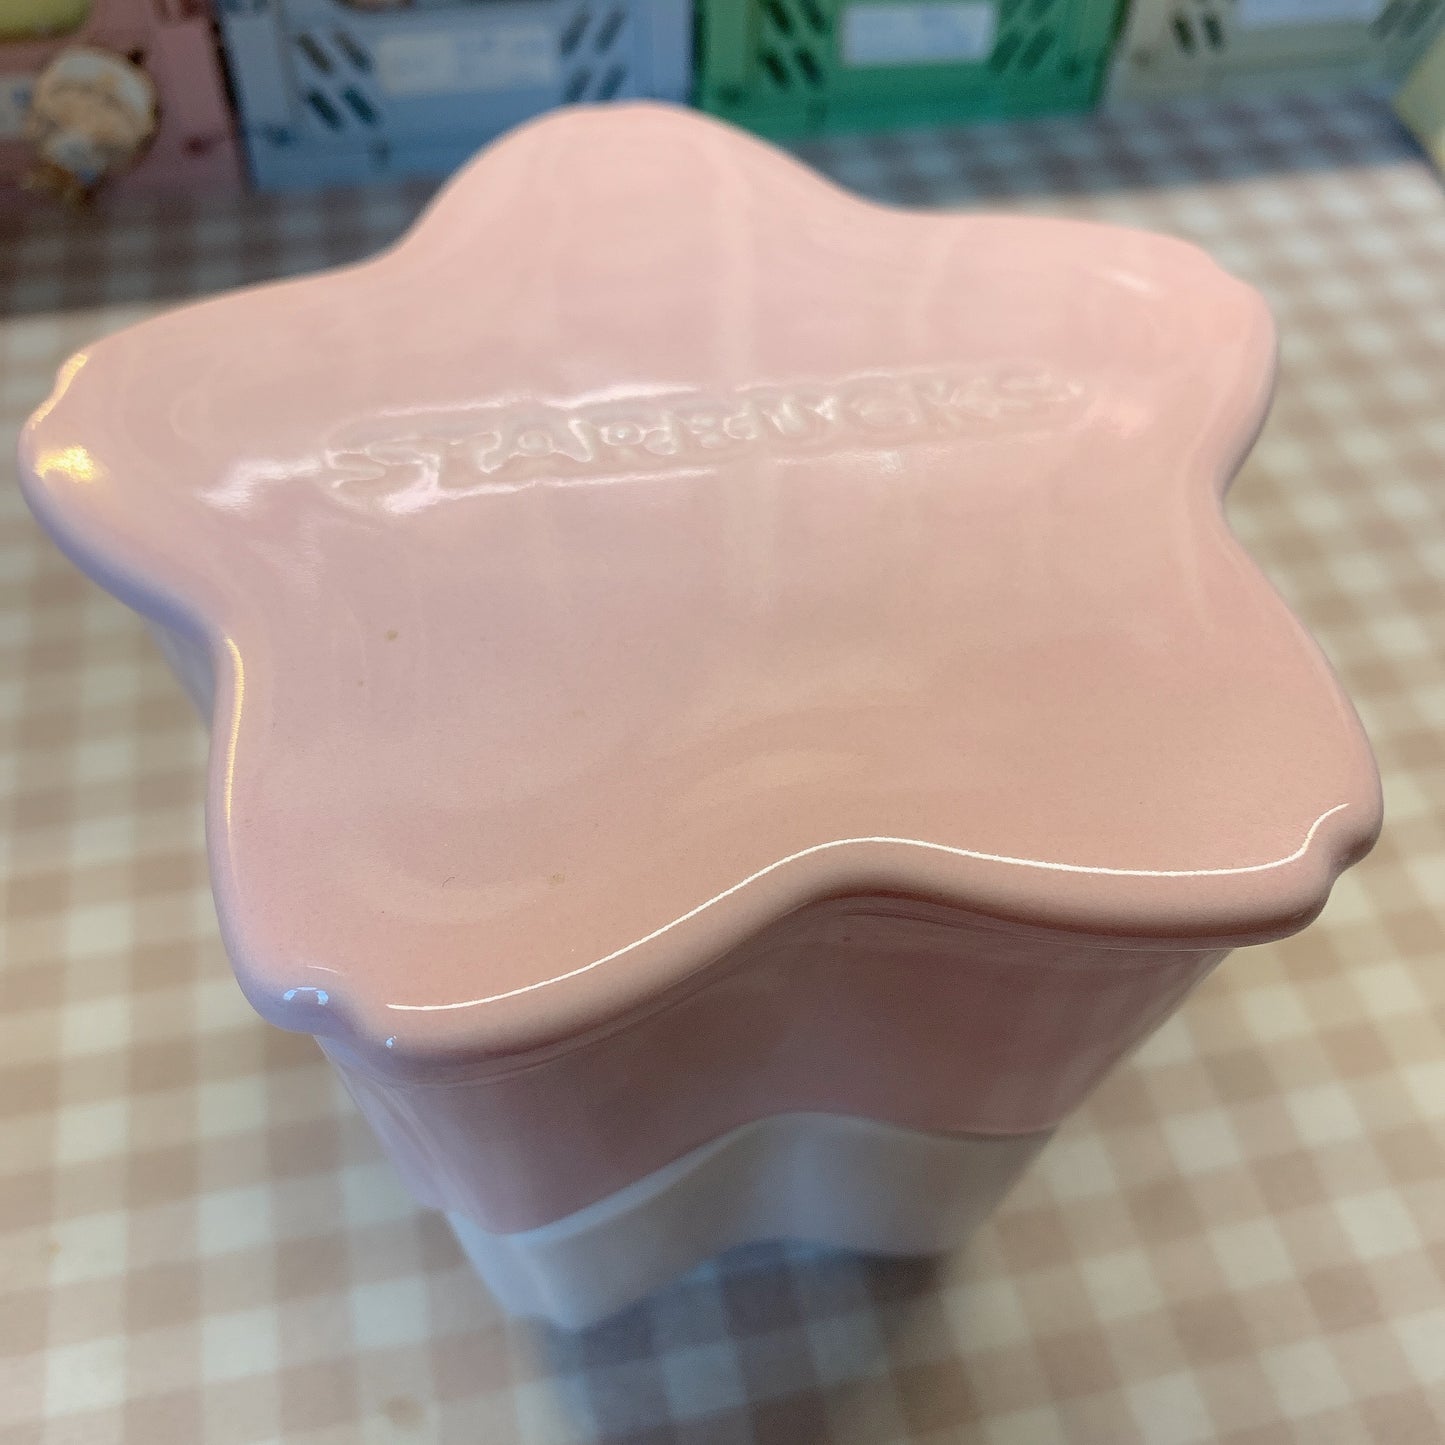 Japan Starbucks 2021 Sakura season ceramics double storage box